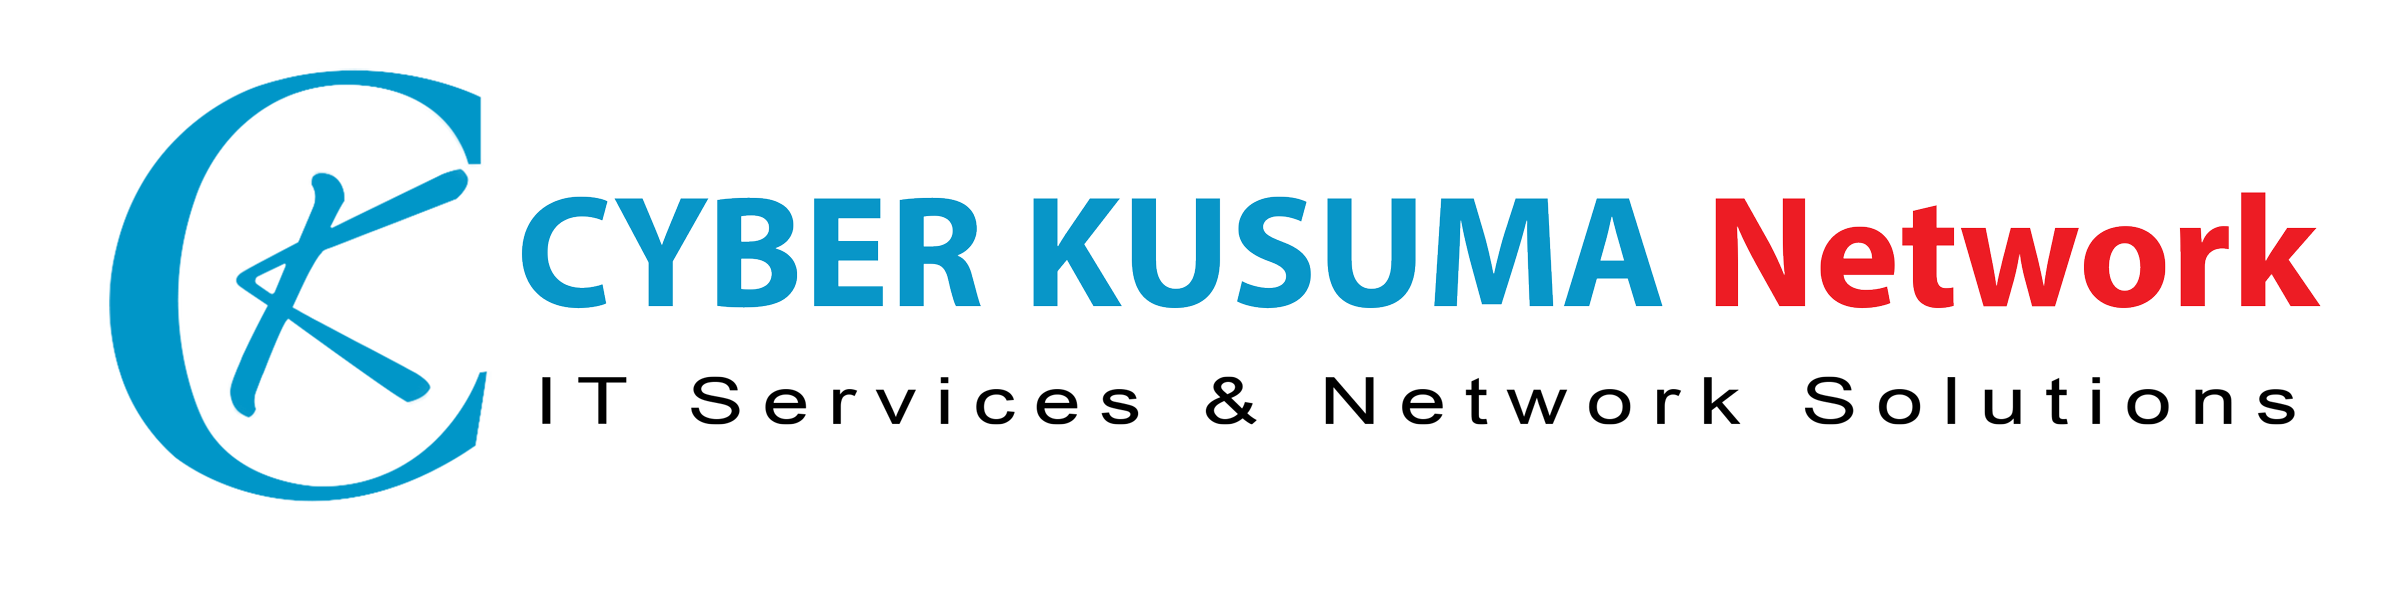 Cyber Kusuma Network